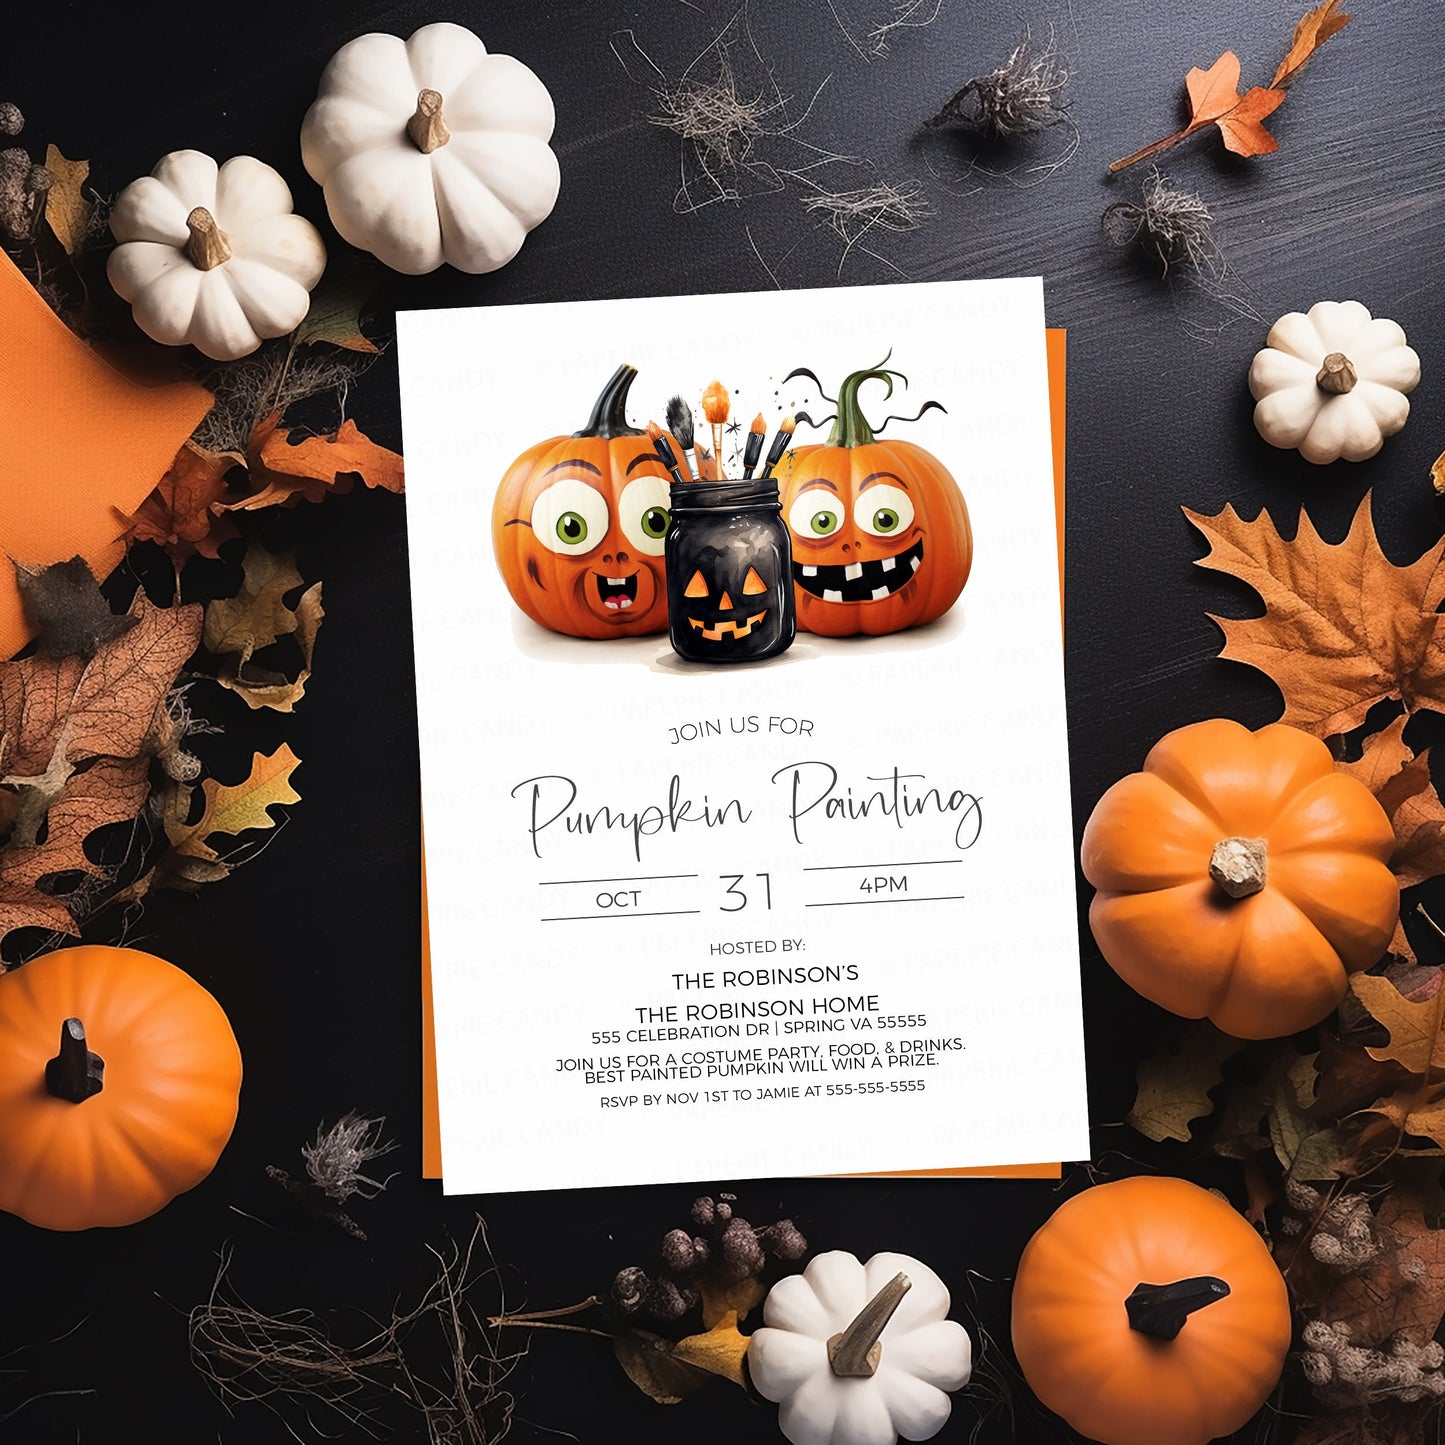 Pumpkin Painting Party Invitation, Jack-o-lantern Painting Party Invite, Kids Halloween Party, Pumpkin Pizza School Event Editable Printable